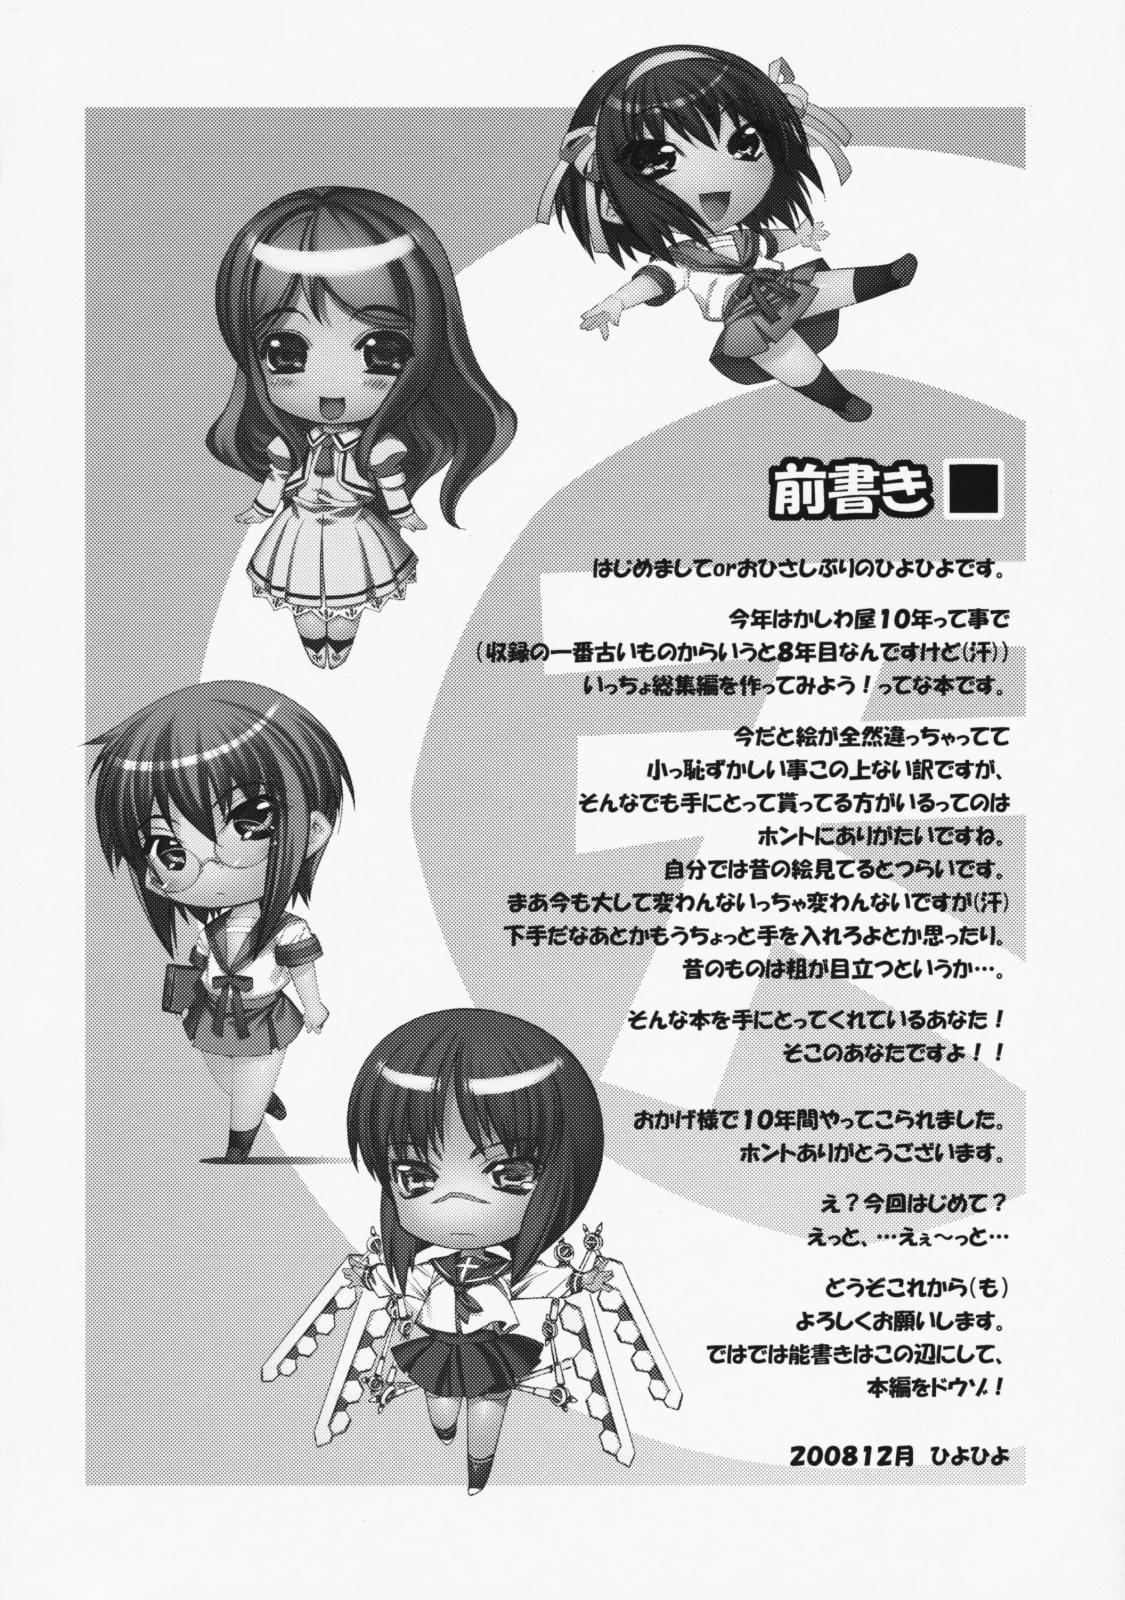 Thuylinh Kashiwa-ya Circle 10th Anniversary - Naruto Love hina Pretty cure Busou renkin Cosmic baton girl comet san Verified Profile - Page 3